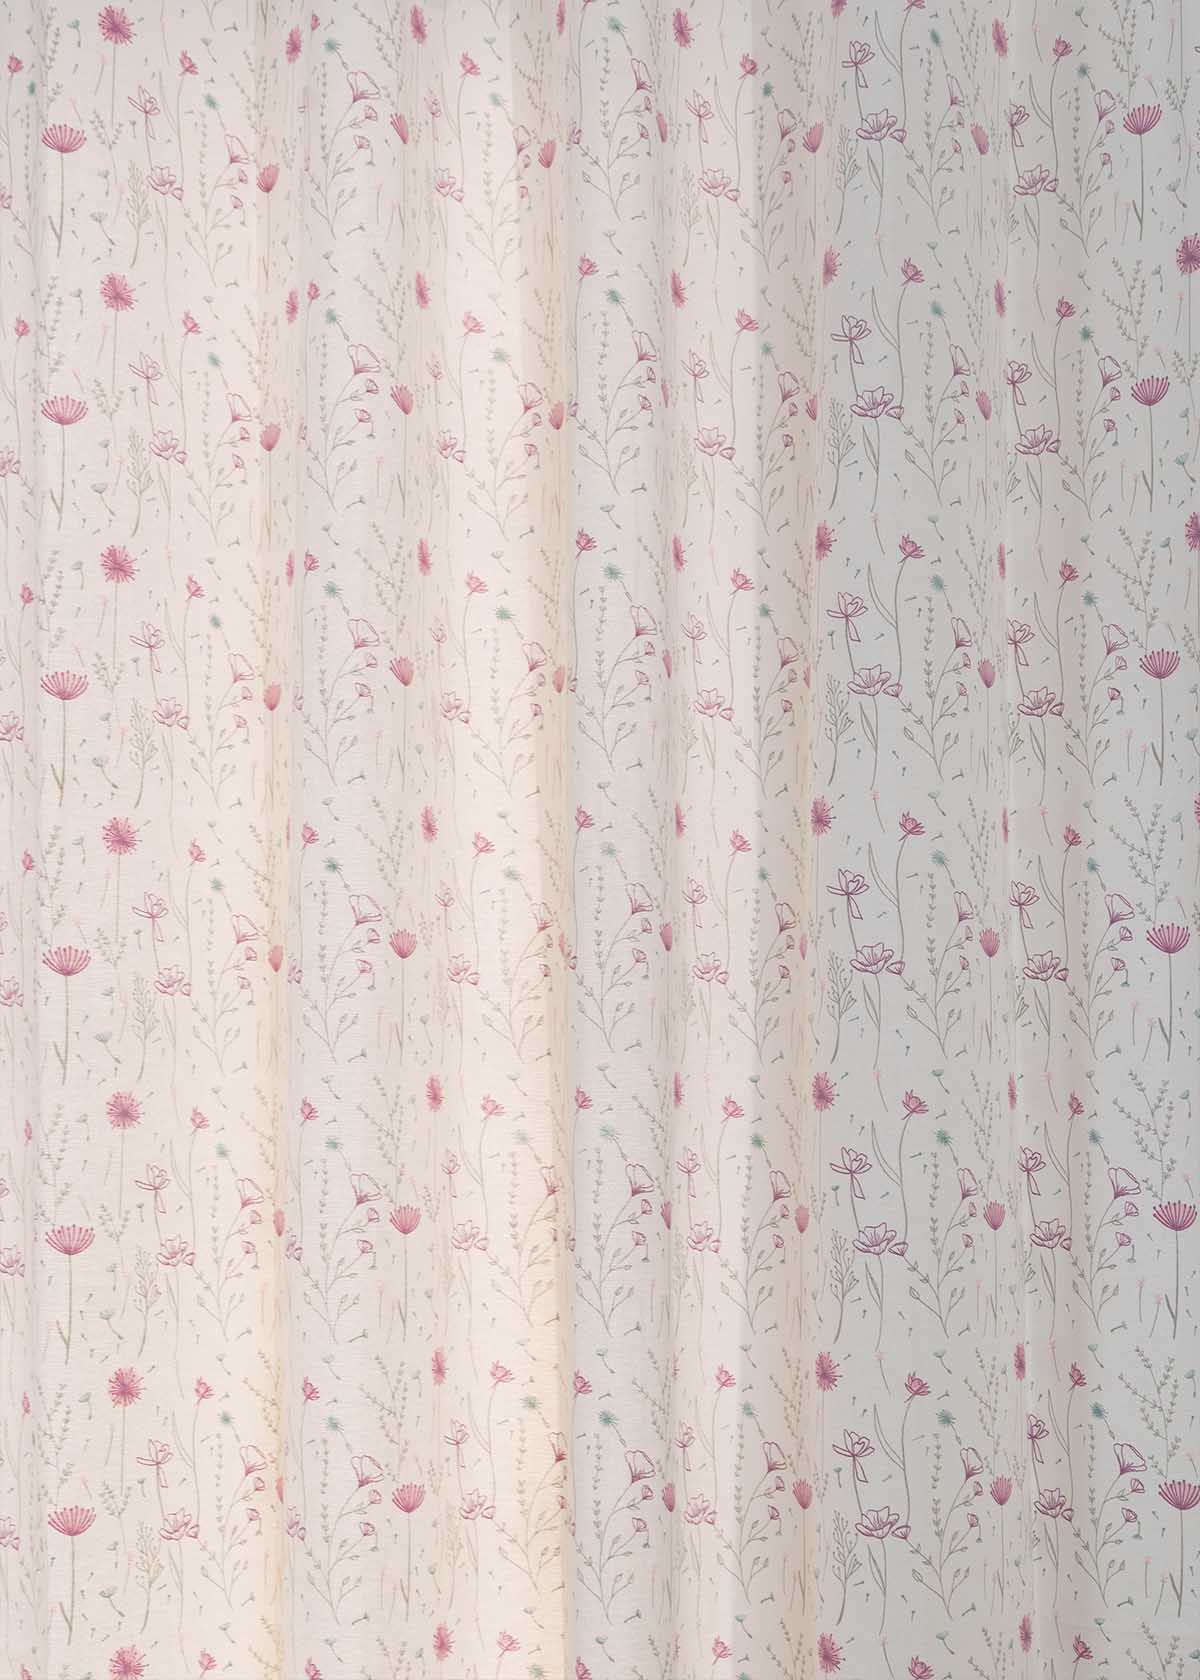 Drifting dandelion printed cotton Fabric - Lavender